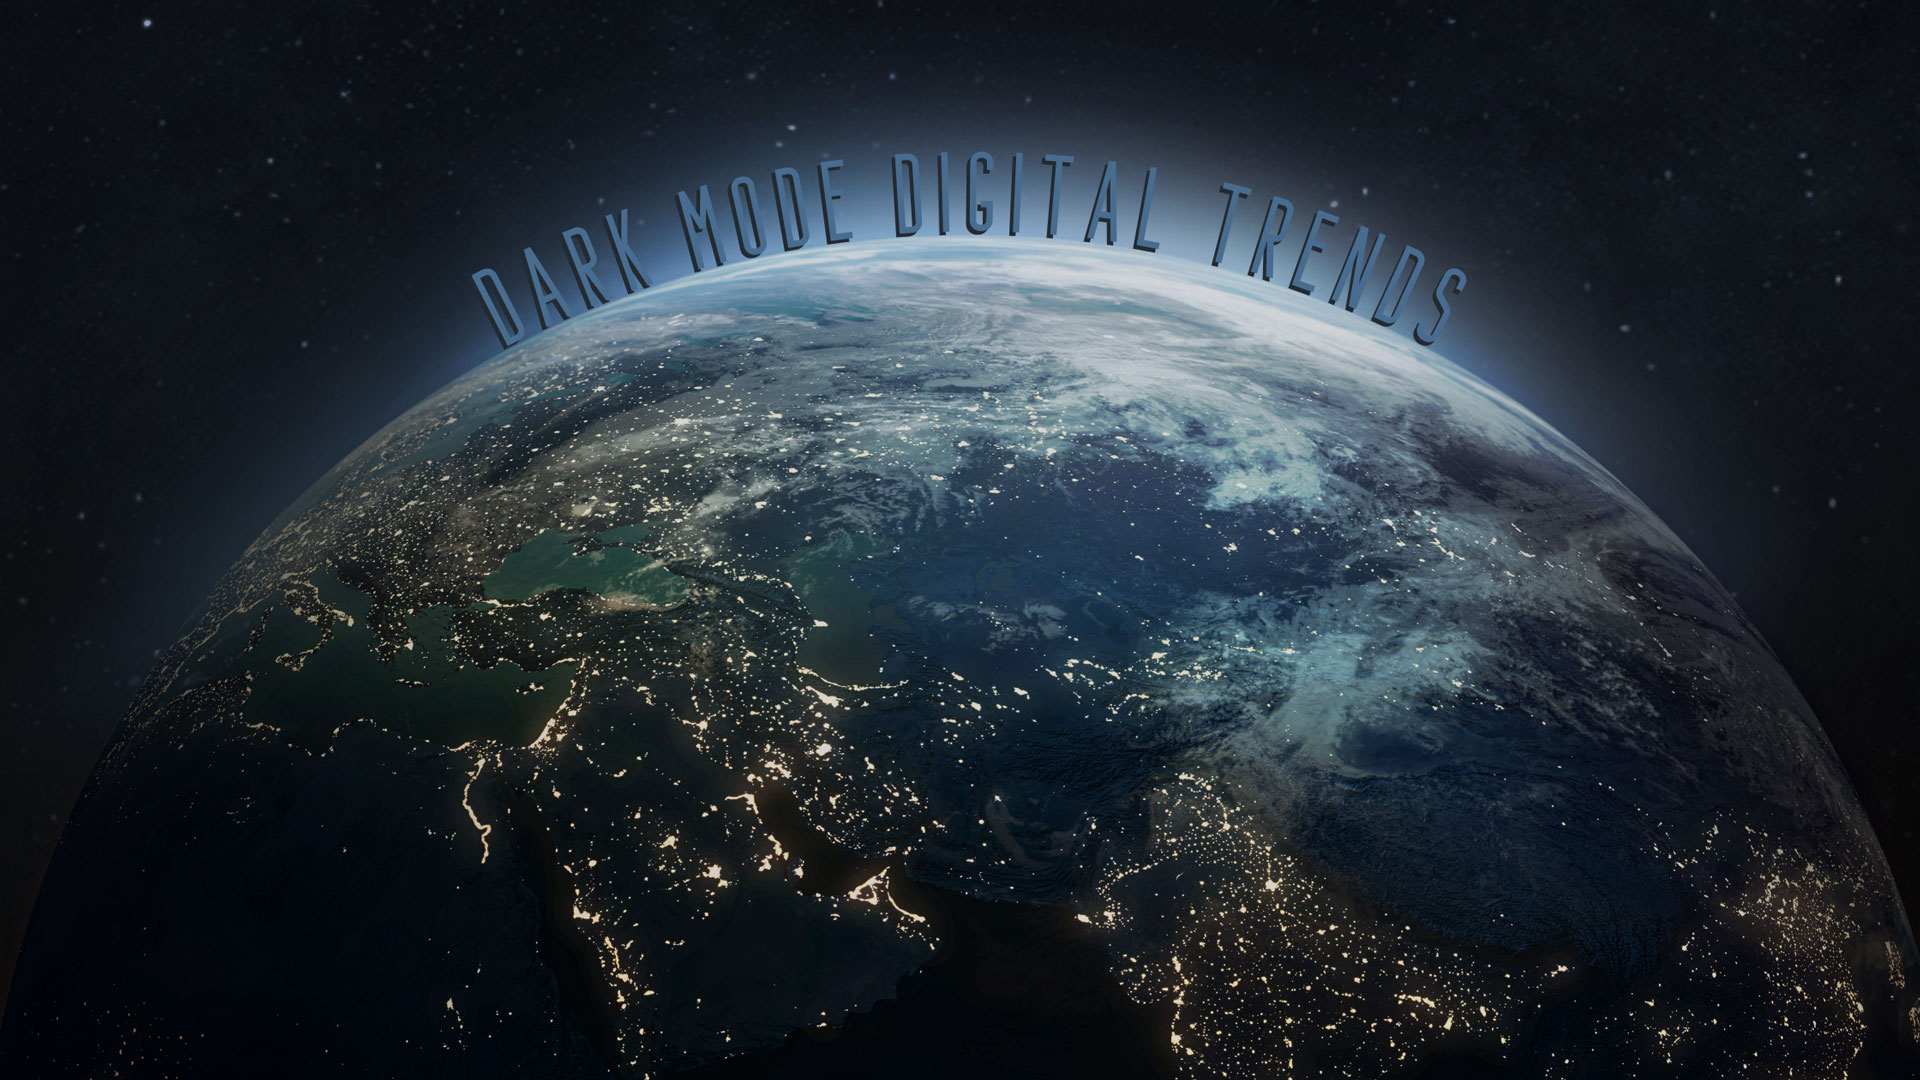 dark-mode-digital-trends-2020-blue-ocean-interactive-marketing-blog